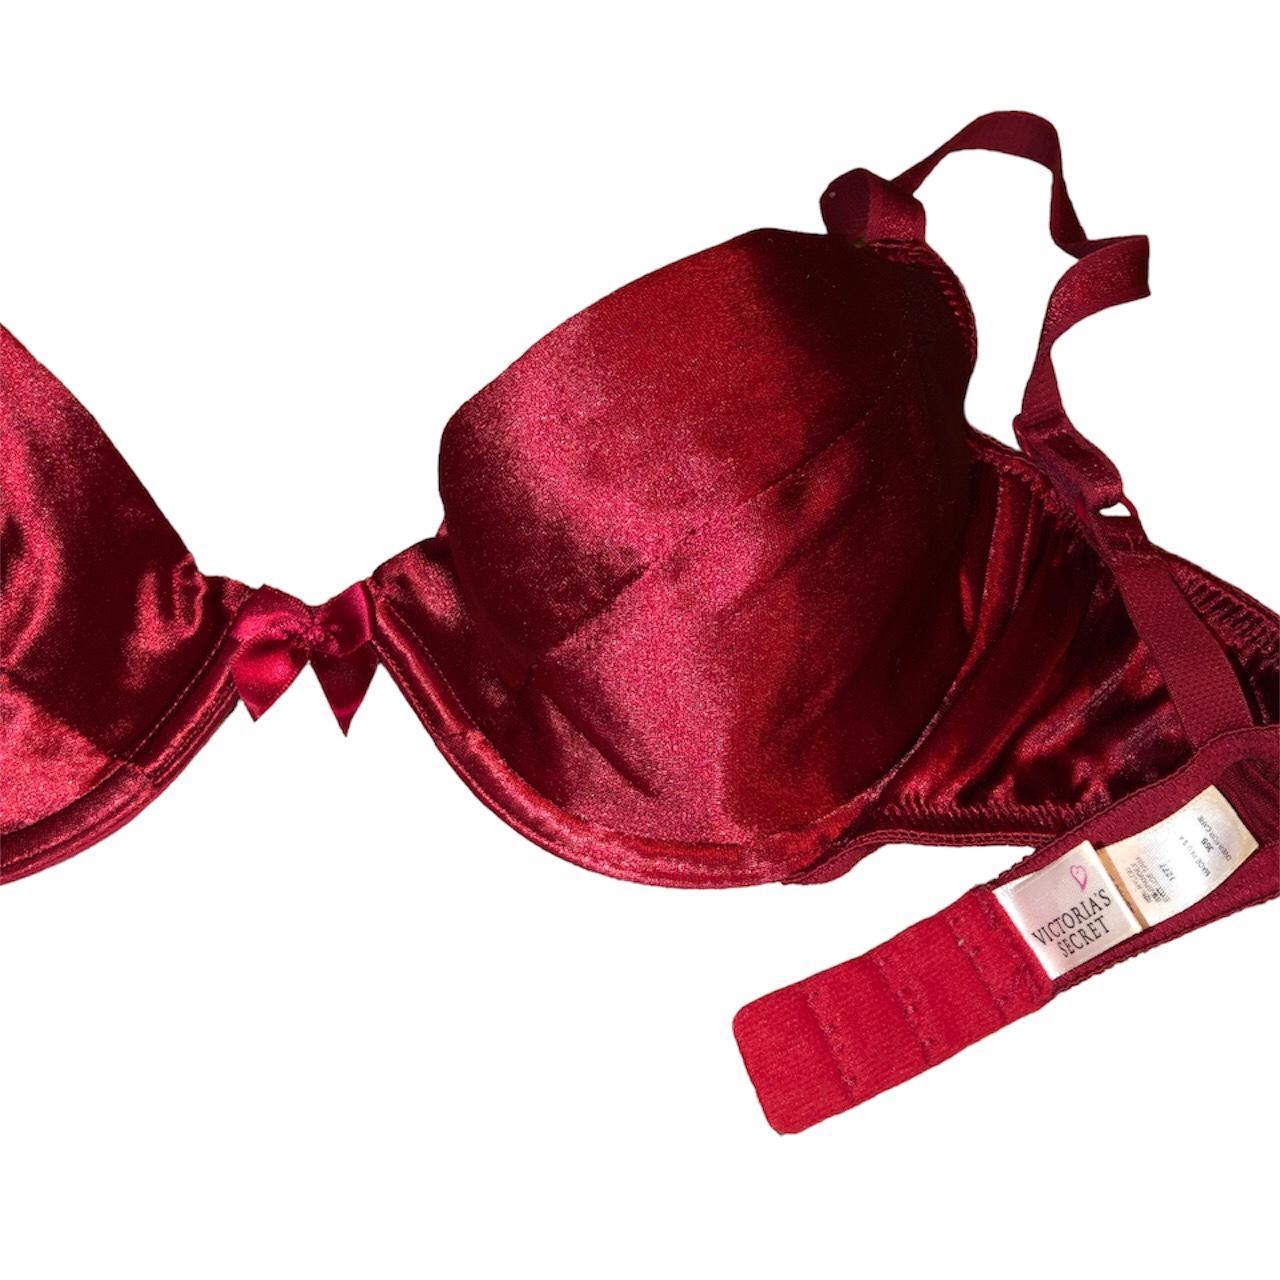 Victoria's Secret 34D Biofit Red color bra . - Depop